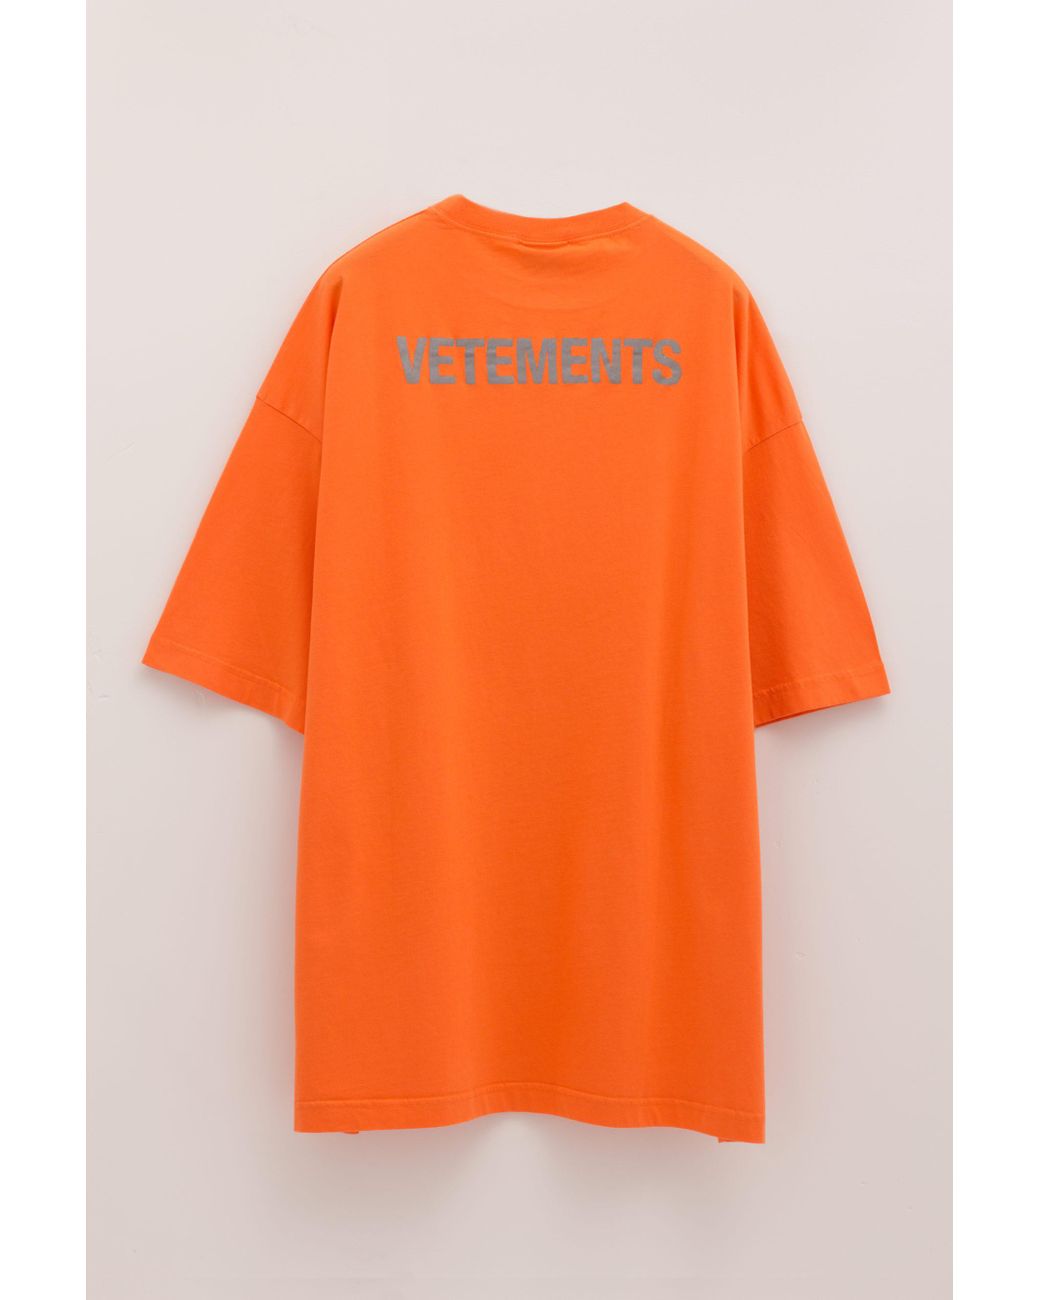 Vetements Staff Reflector T-shirt in Orange for Men | Lyst Canada